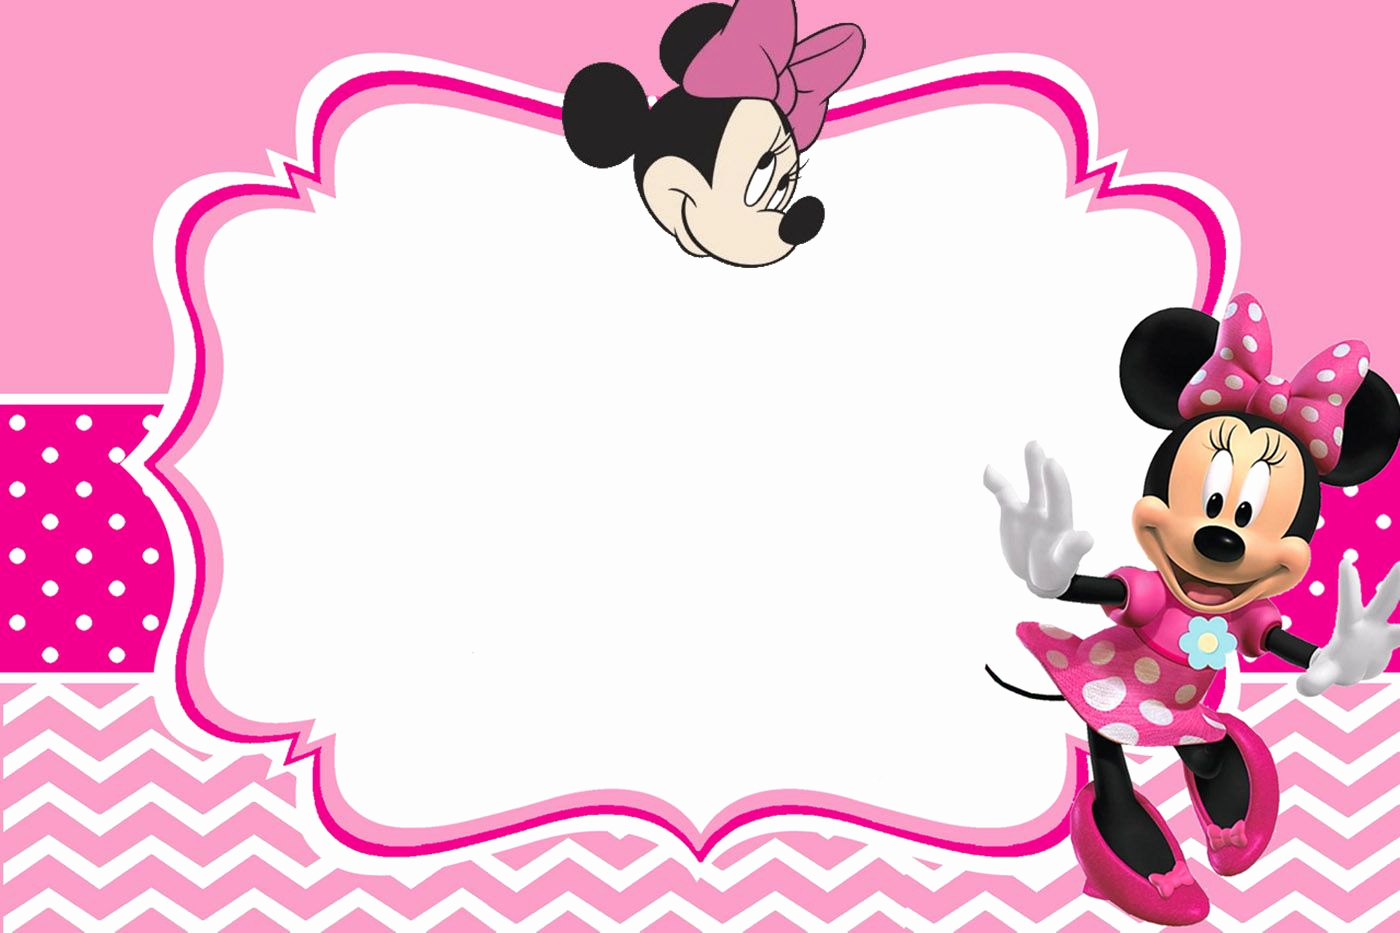 Minnie Mouse Invitation Card Elegant Minnie Mouse Invitation Card Design Jmj In 2019